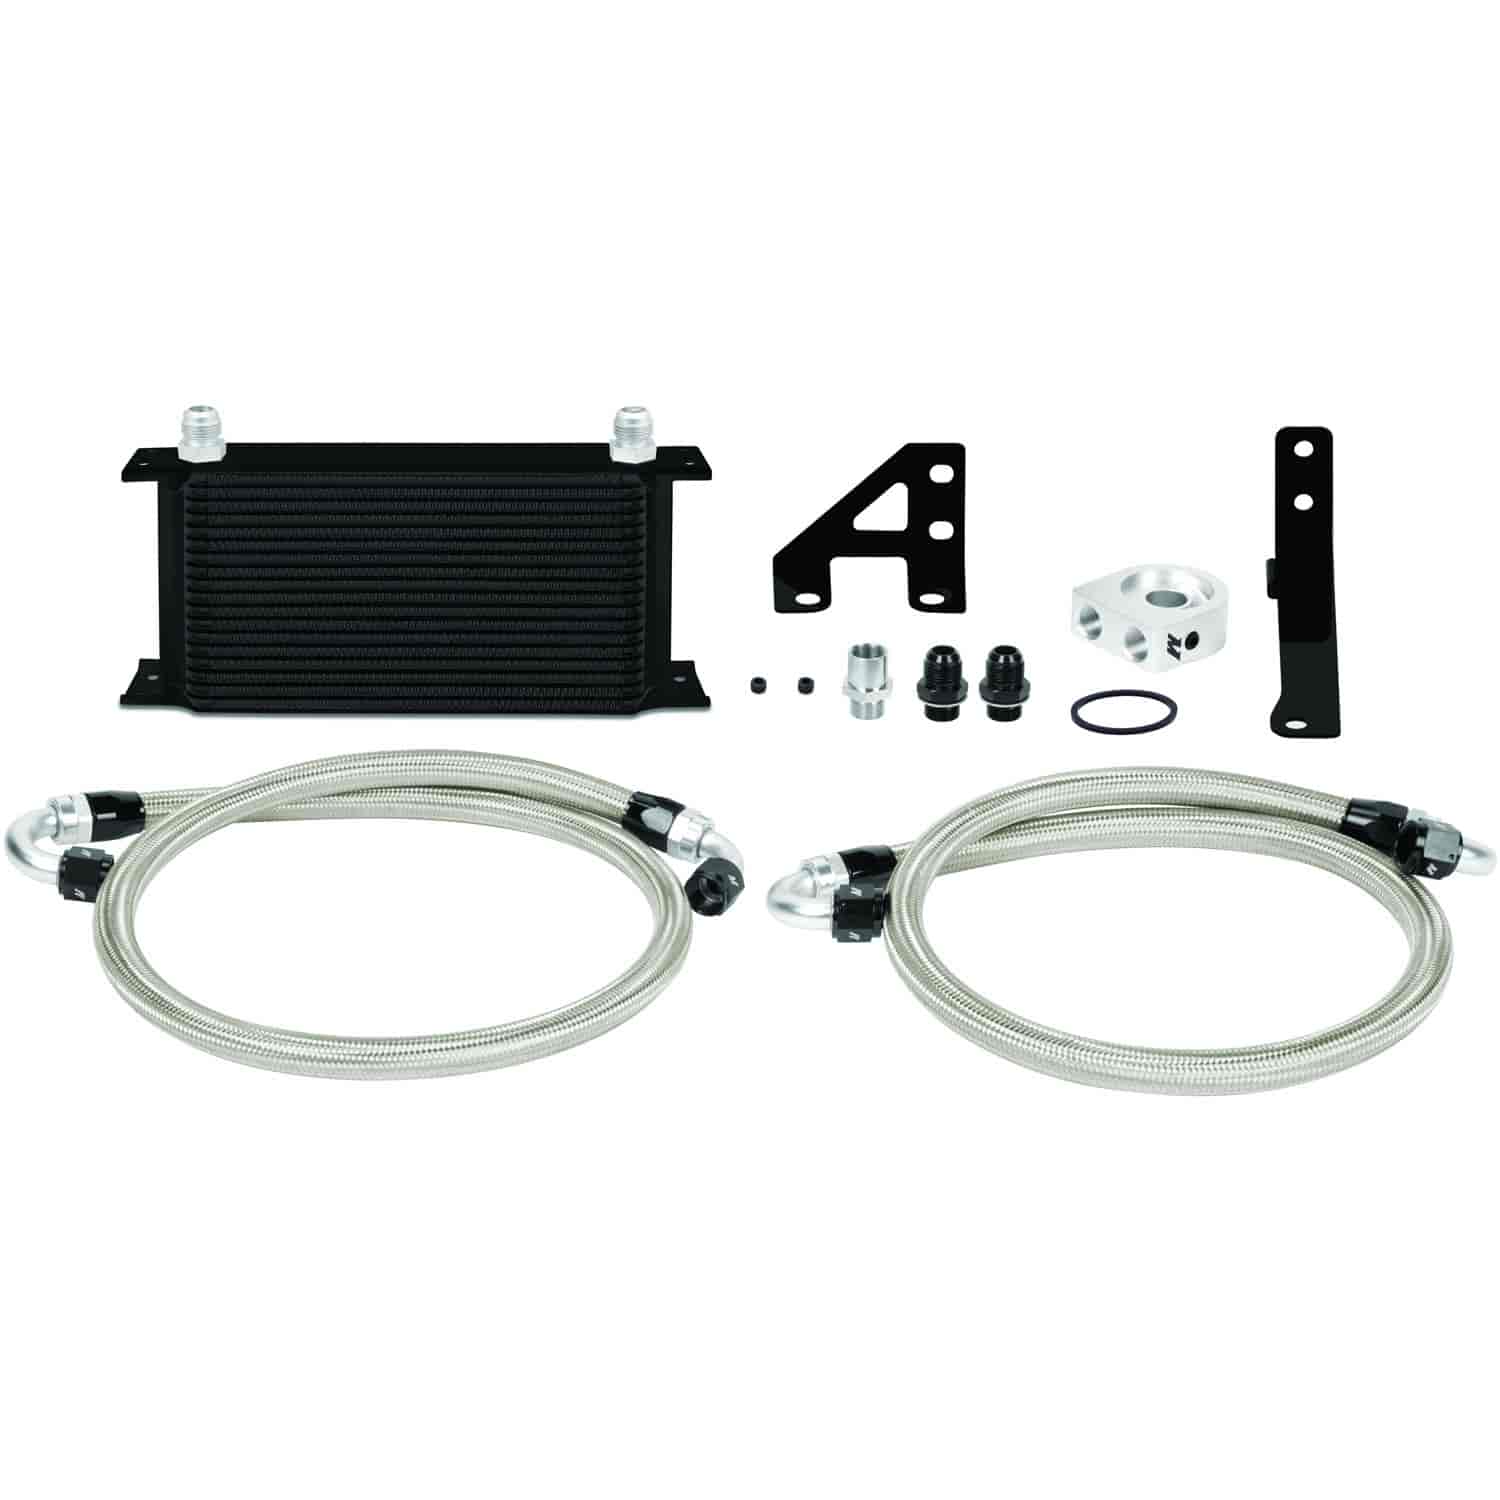 Subaru WRX STI Oil Cooler Kit - MFG Part No. MMOC-STI-15BK